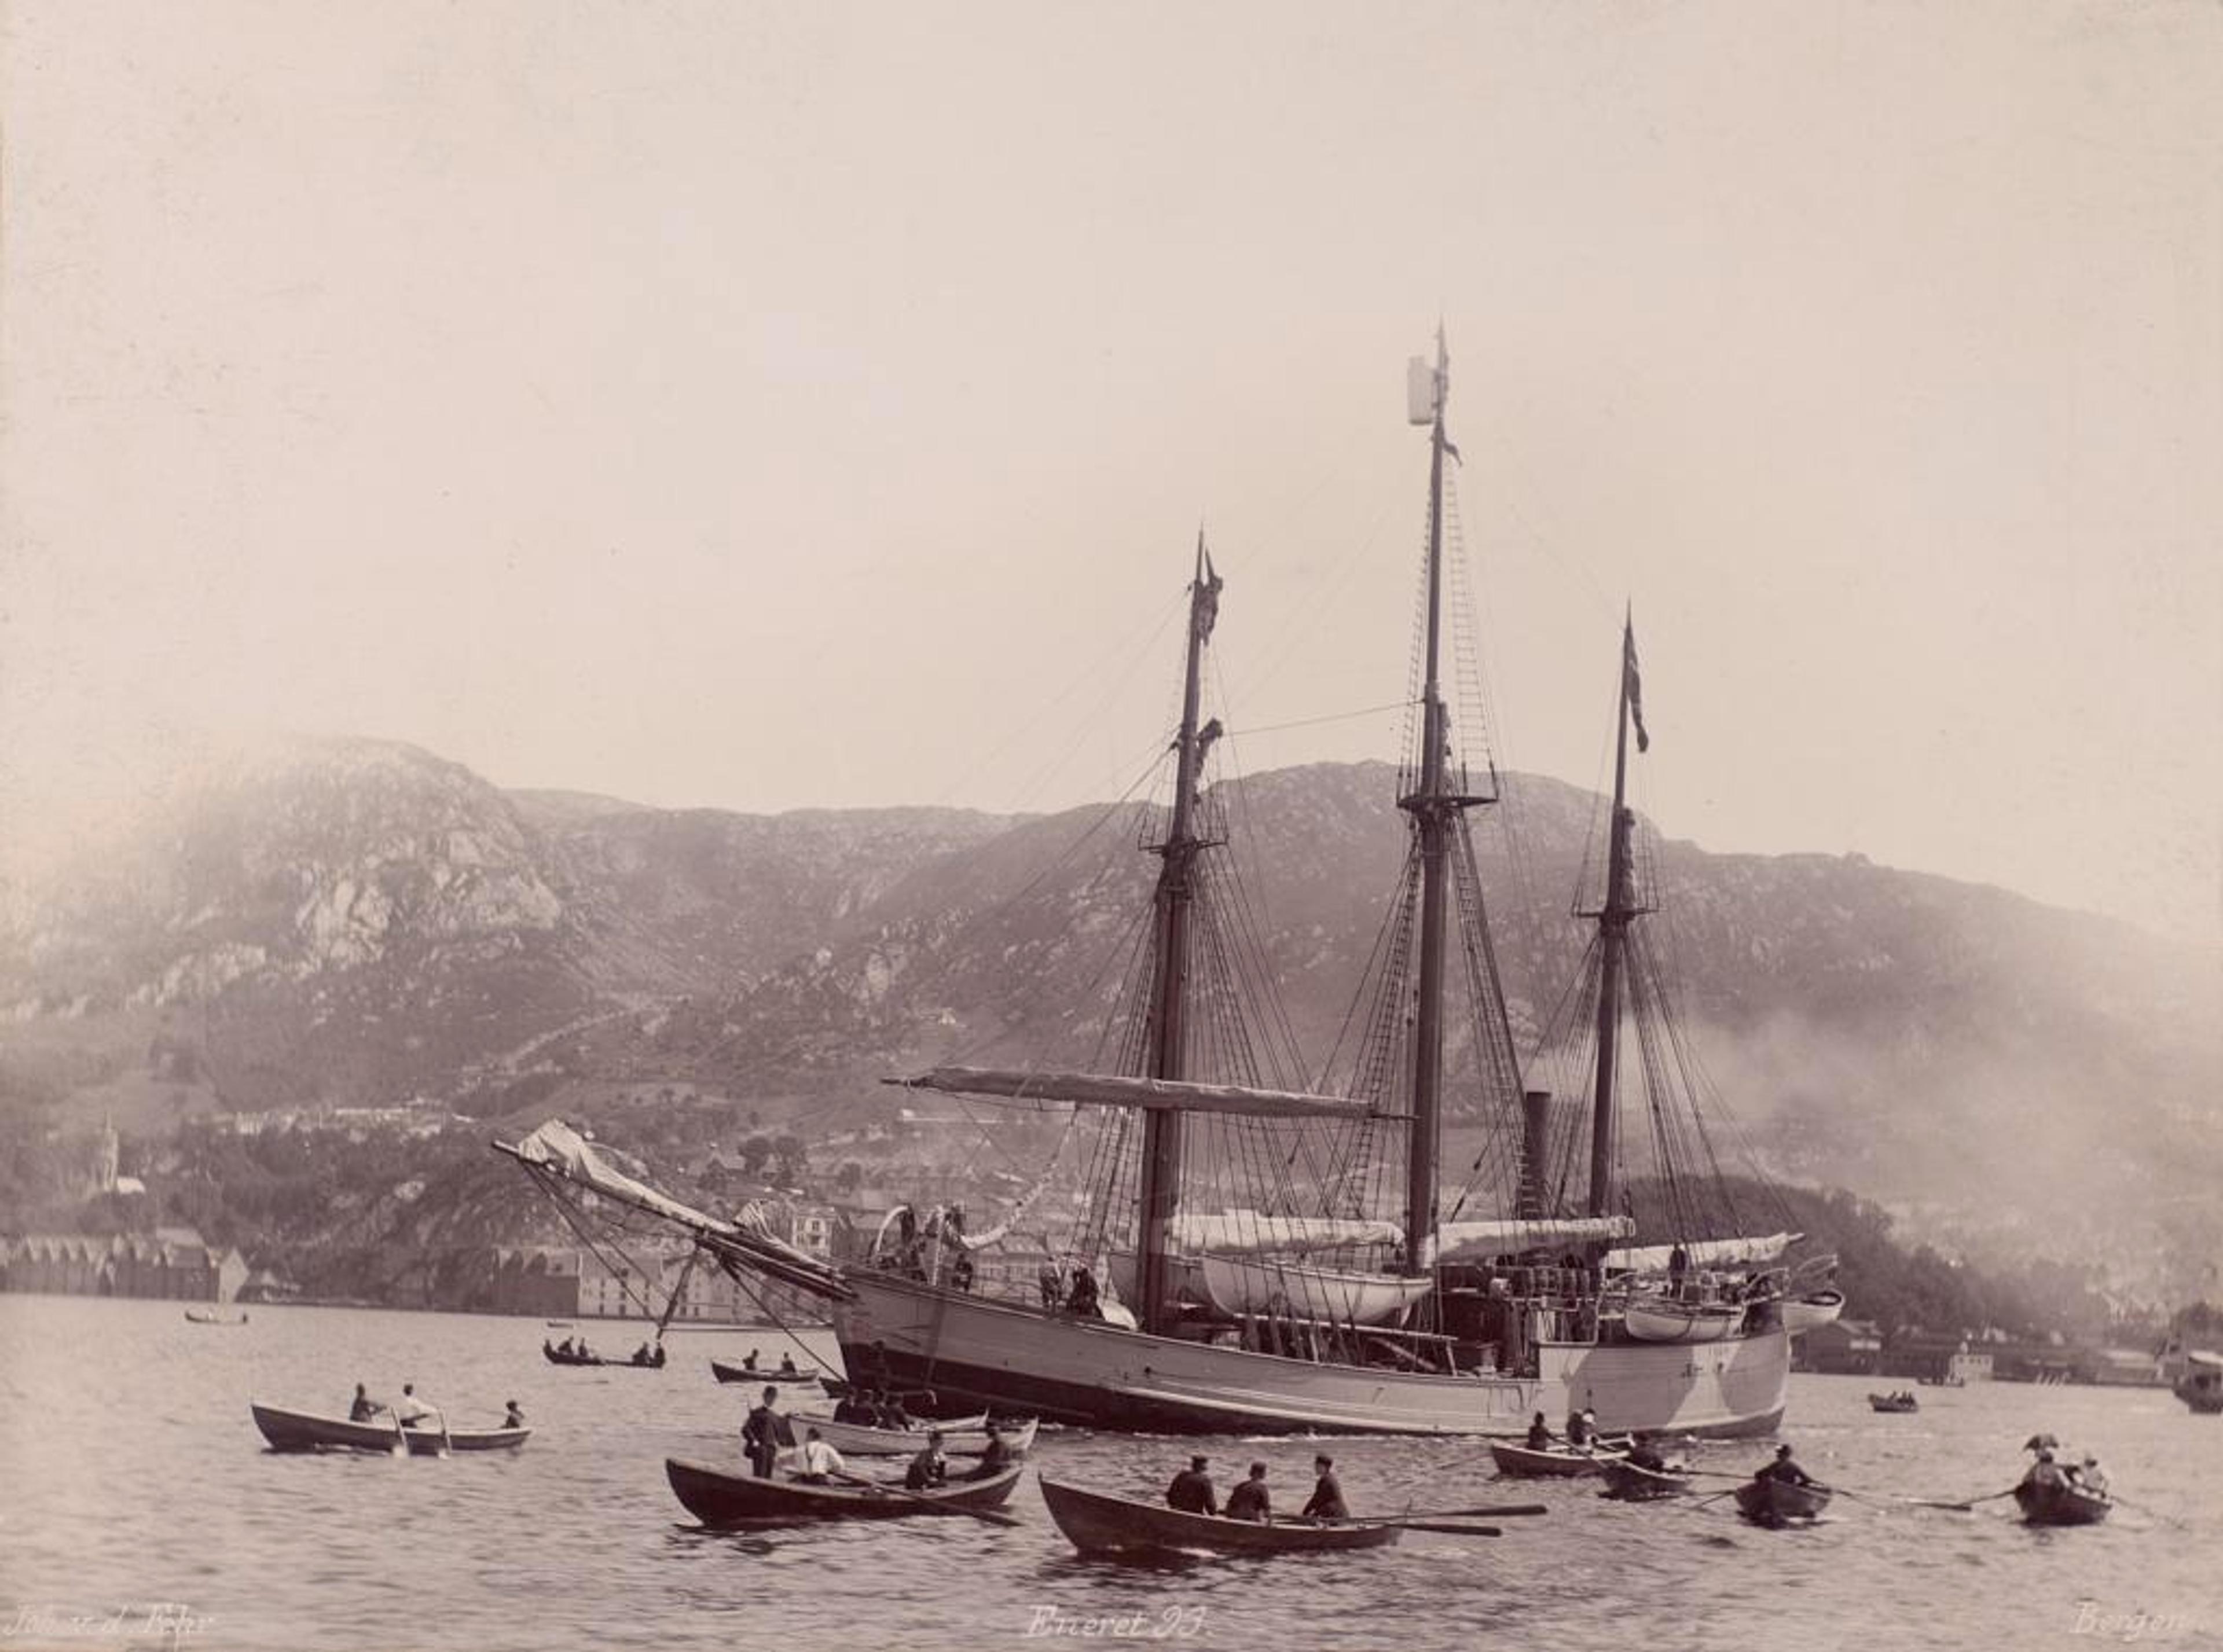 Nordpolexpeditionen under Dr. Nansen forlader på "Fram" Bergen, sønd. 2 juli 1893